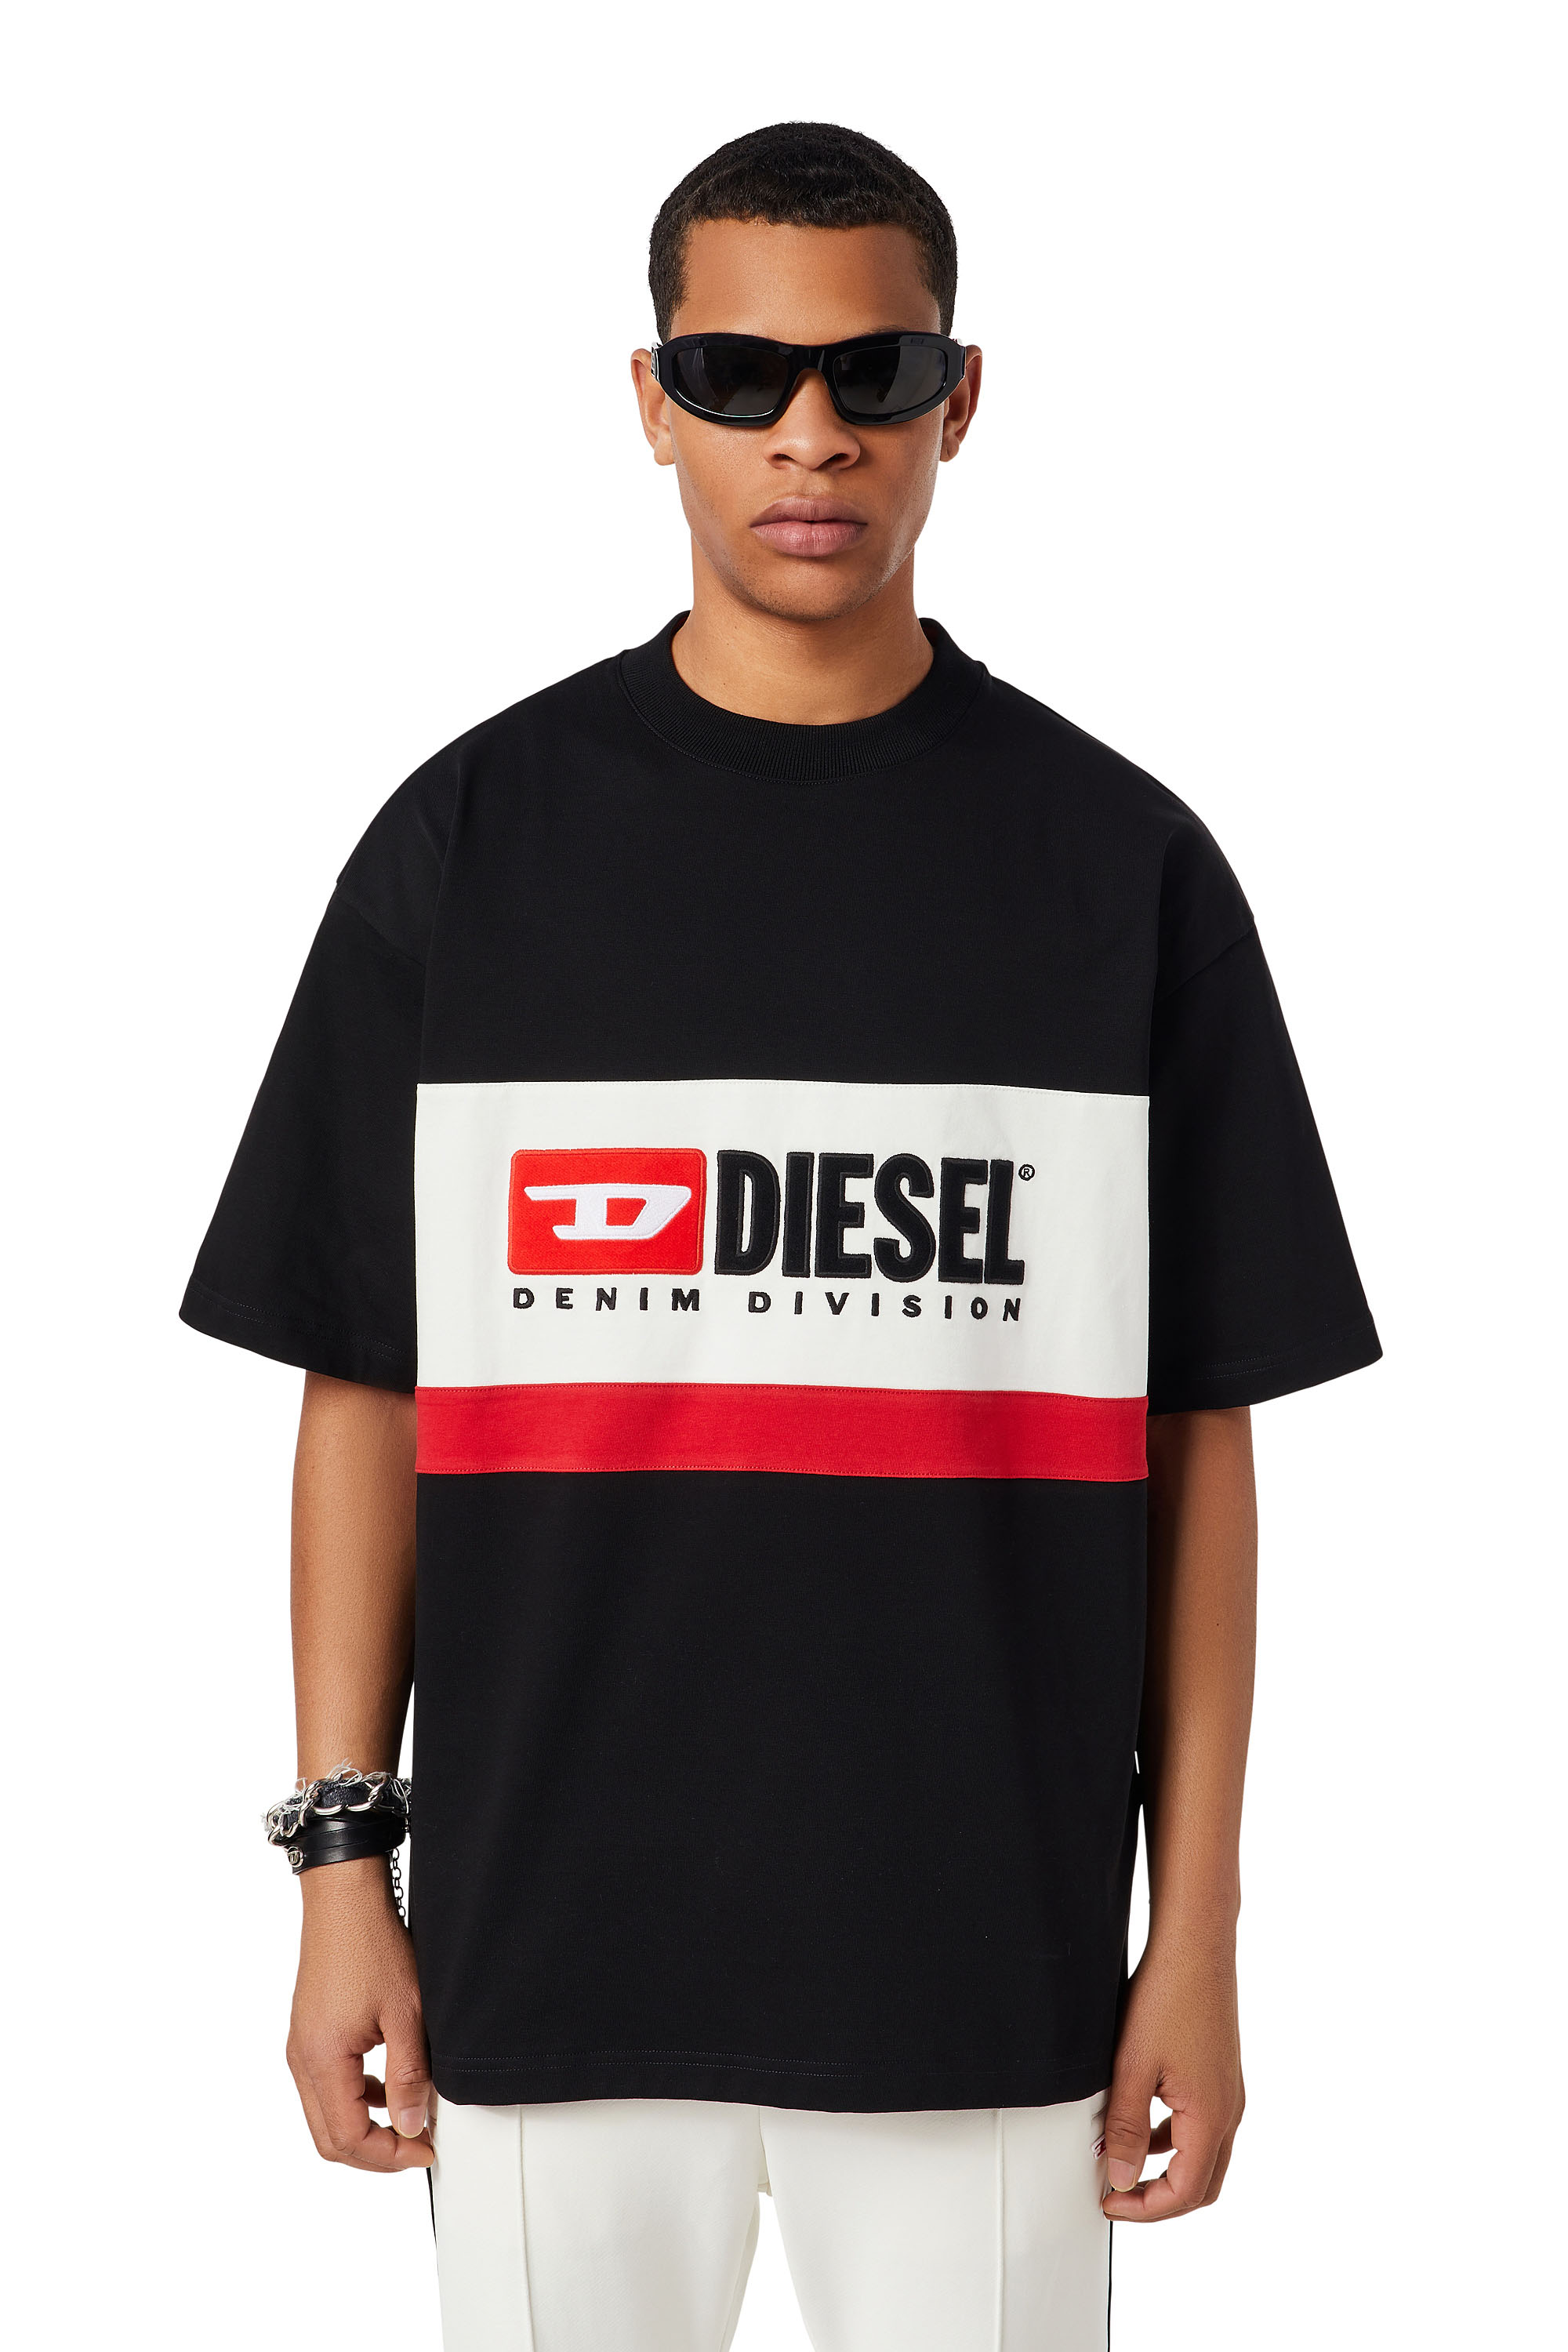 Diesel - T-STREAP-DIVISION, Black - Image 3